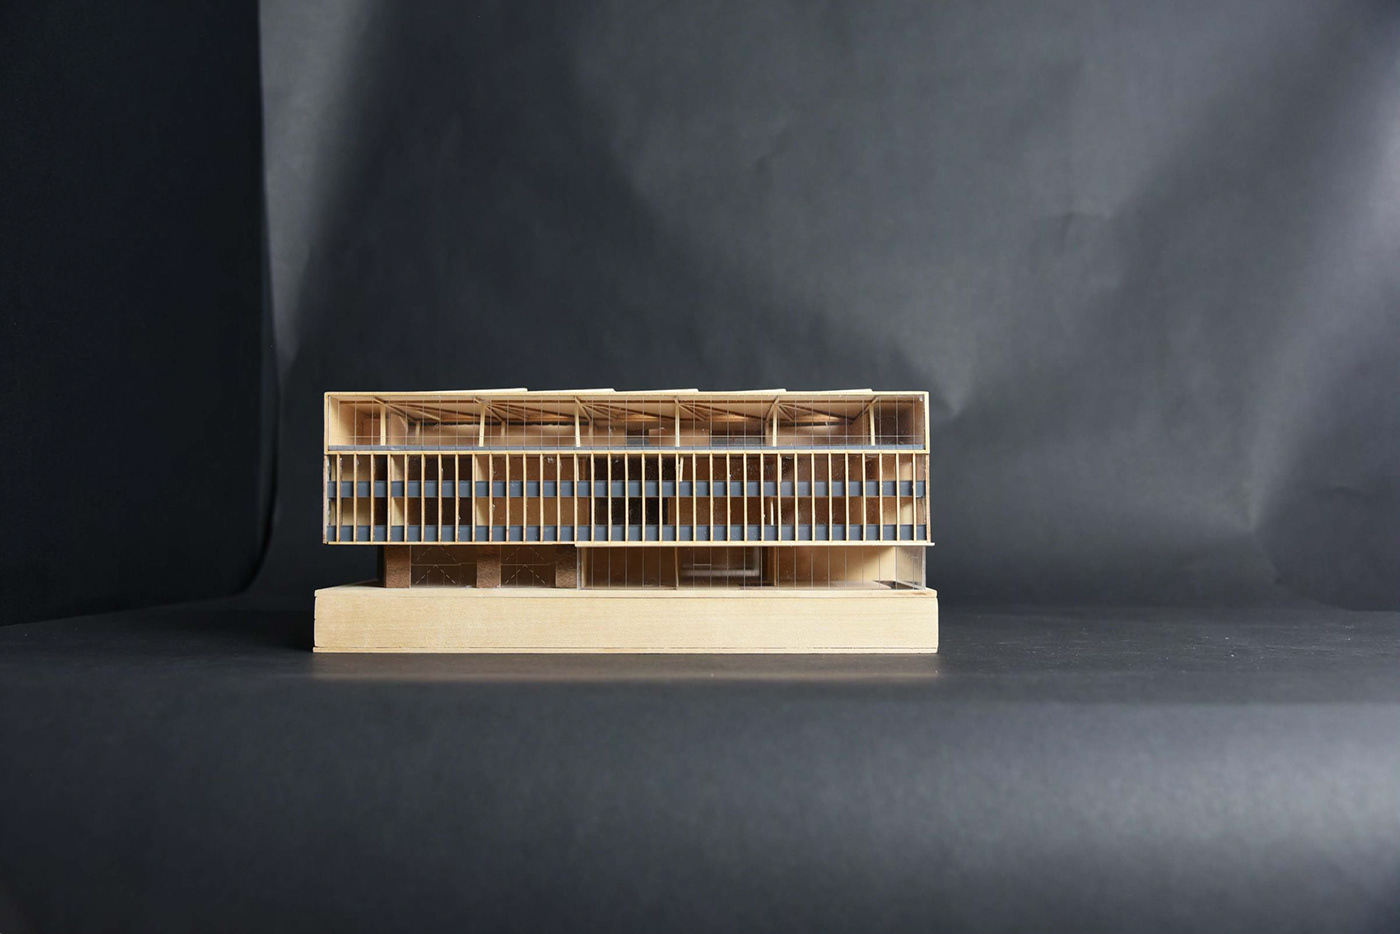 Model Making model architecture woodworking architectural model Workshop scale model building